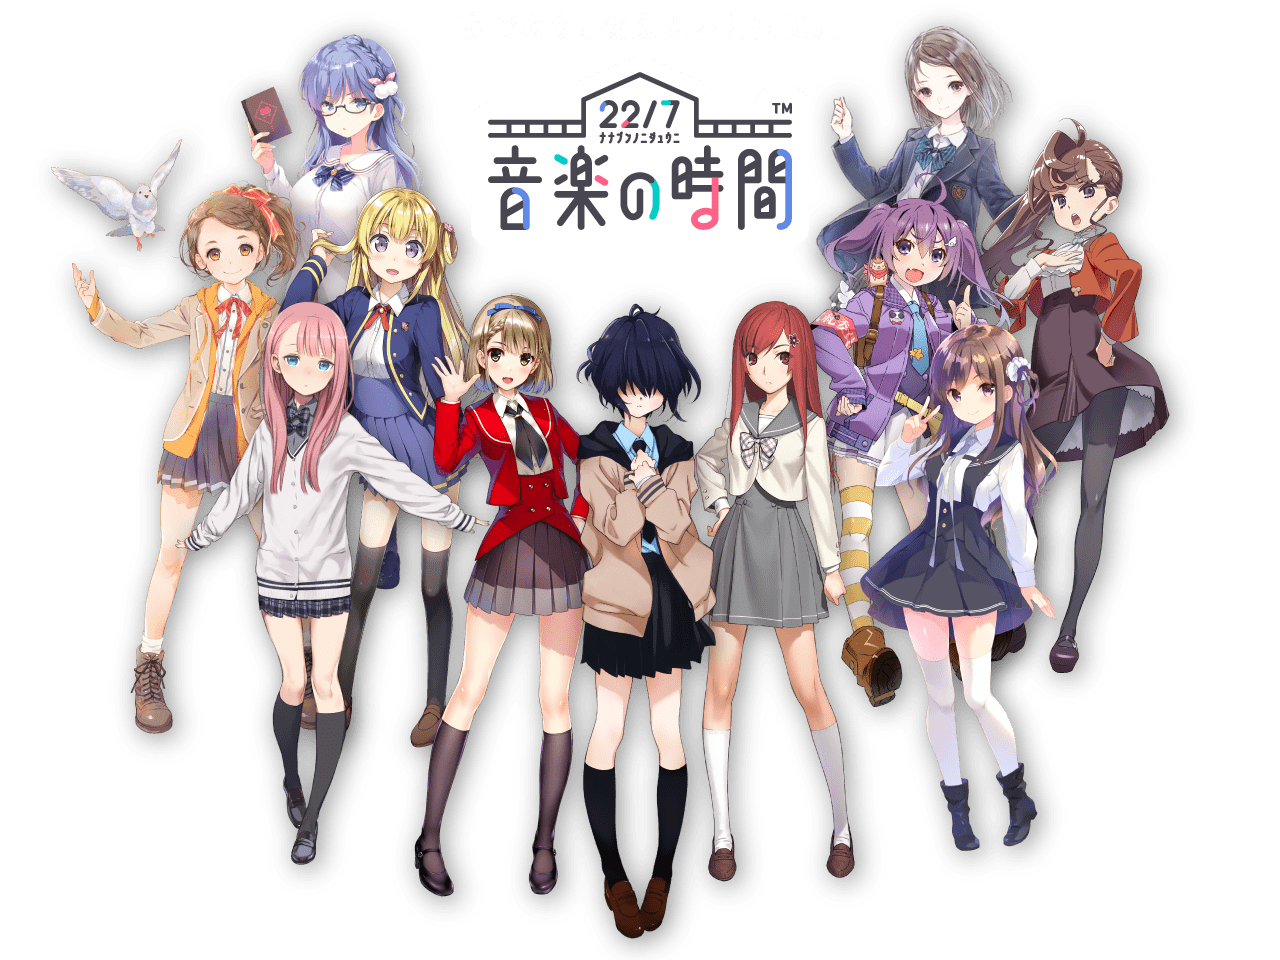 22/7 Anime Gets New Teaser Visual - Anime Herald